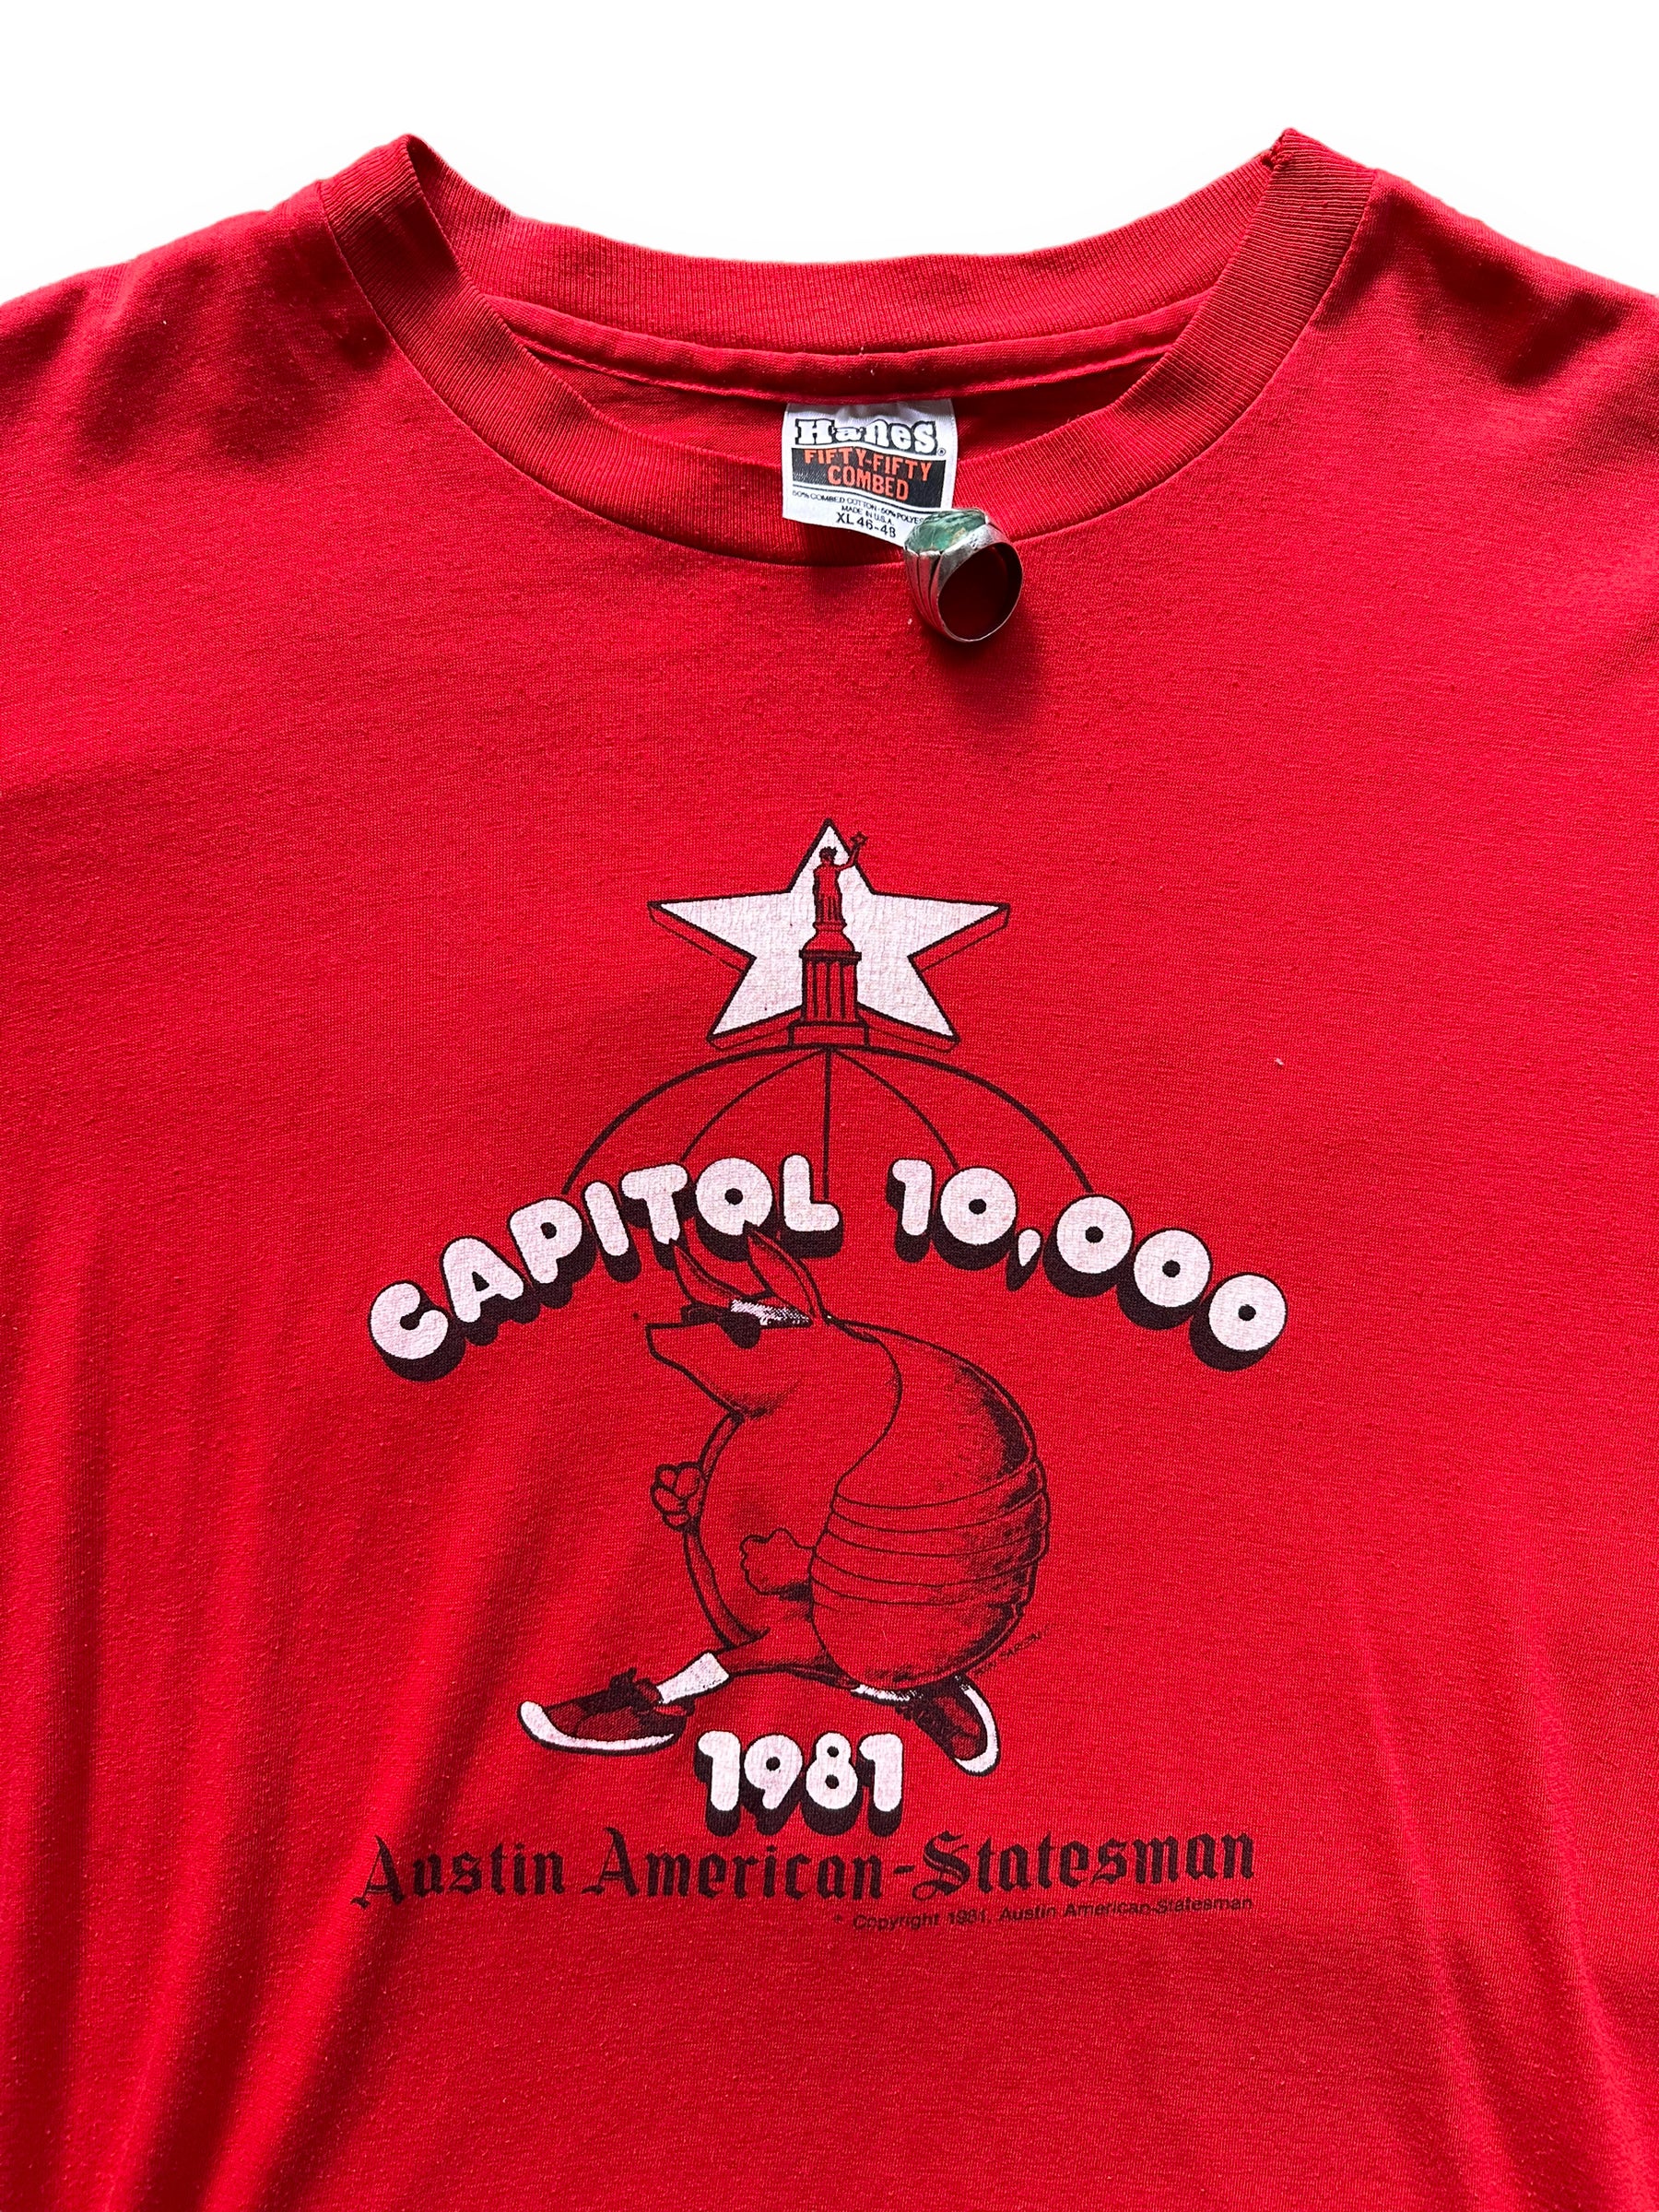 Graphic and Tag Detail on Vintage Austin Capital 10K Run Tee SZ XL | Vintage Austin American Statesman T-Shirts Seattle | Barn Owl Vintage Tees Seattle